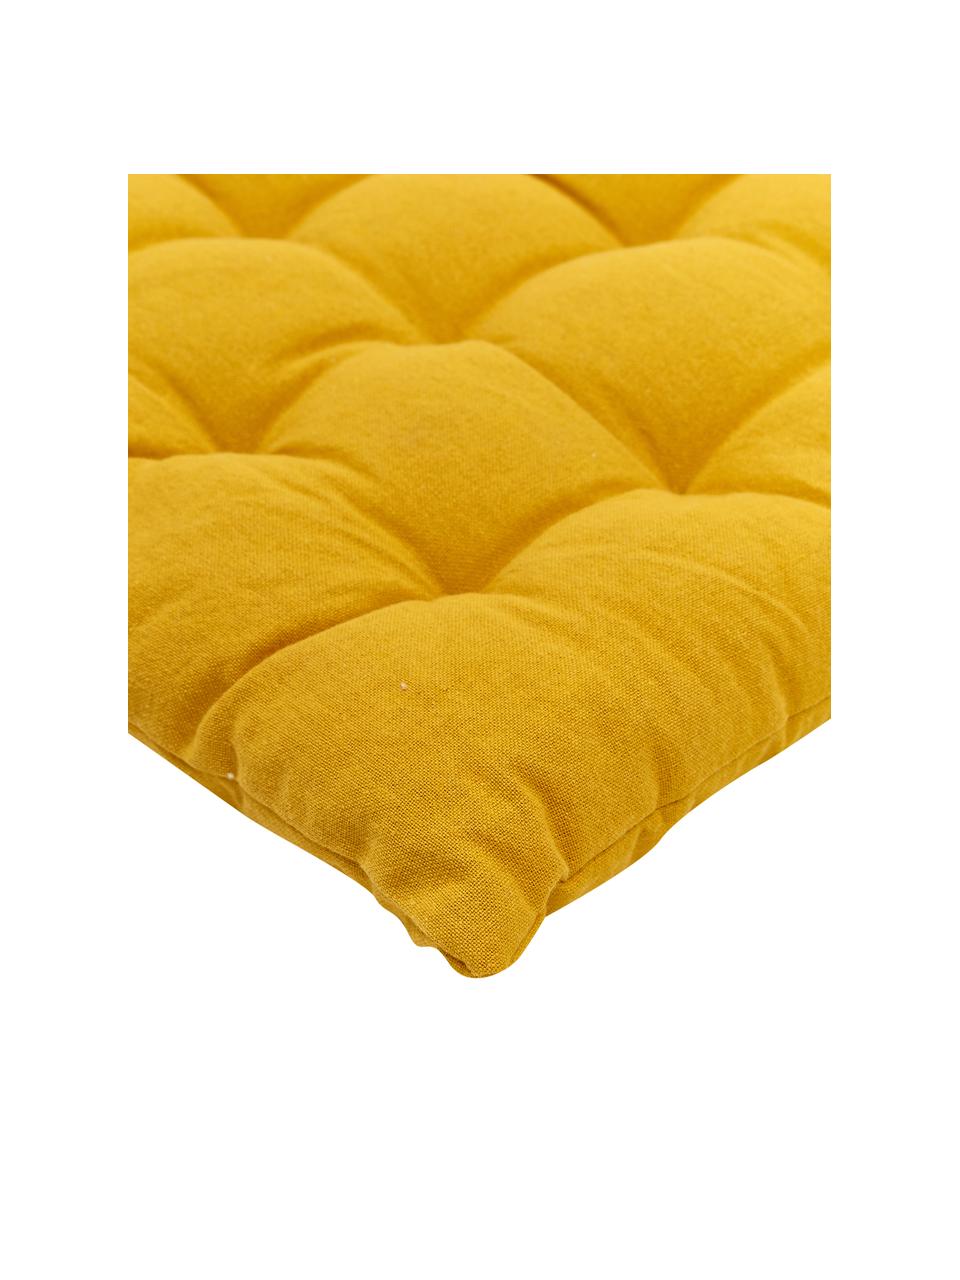 Matelas pour banc jaune moutarde Gavema, Jaune moutarde, larg. 40 x long. 120 cm